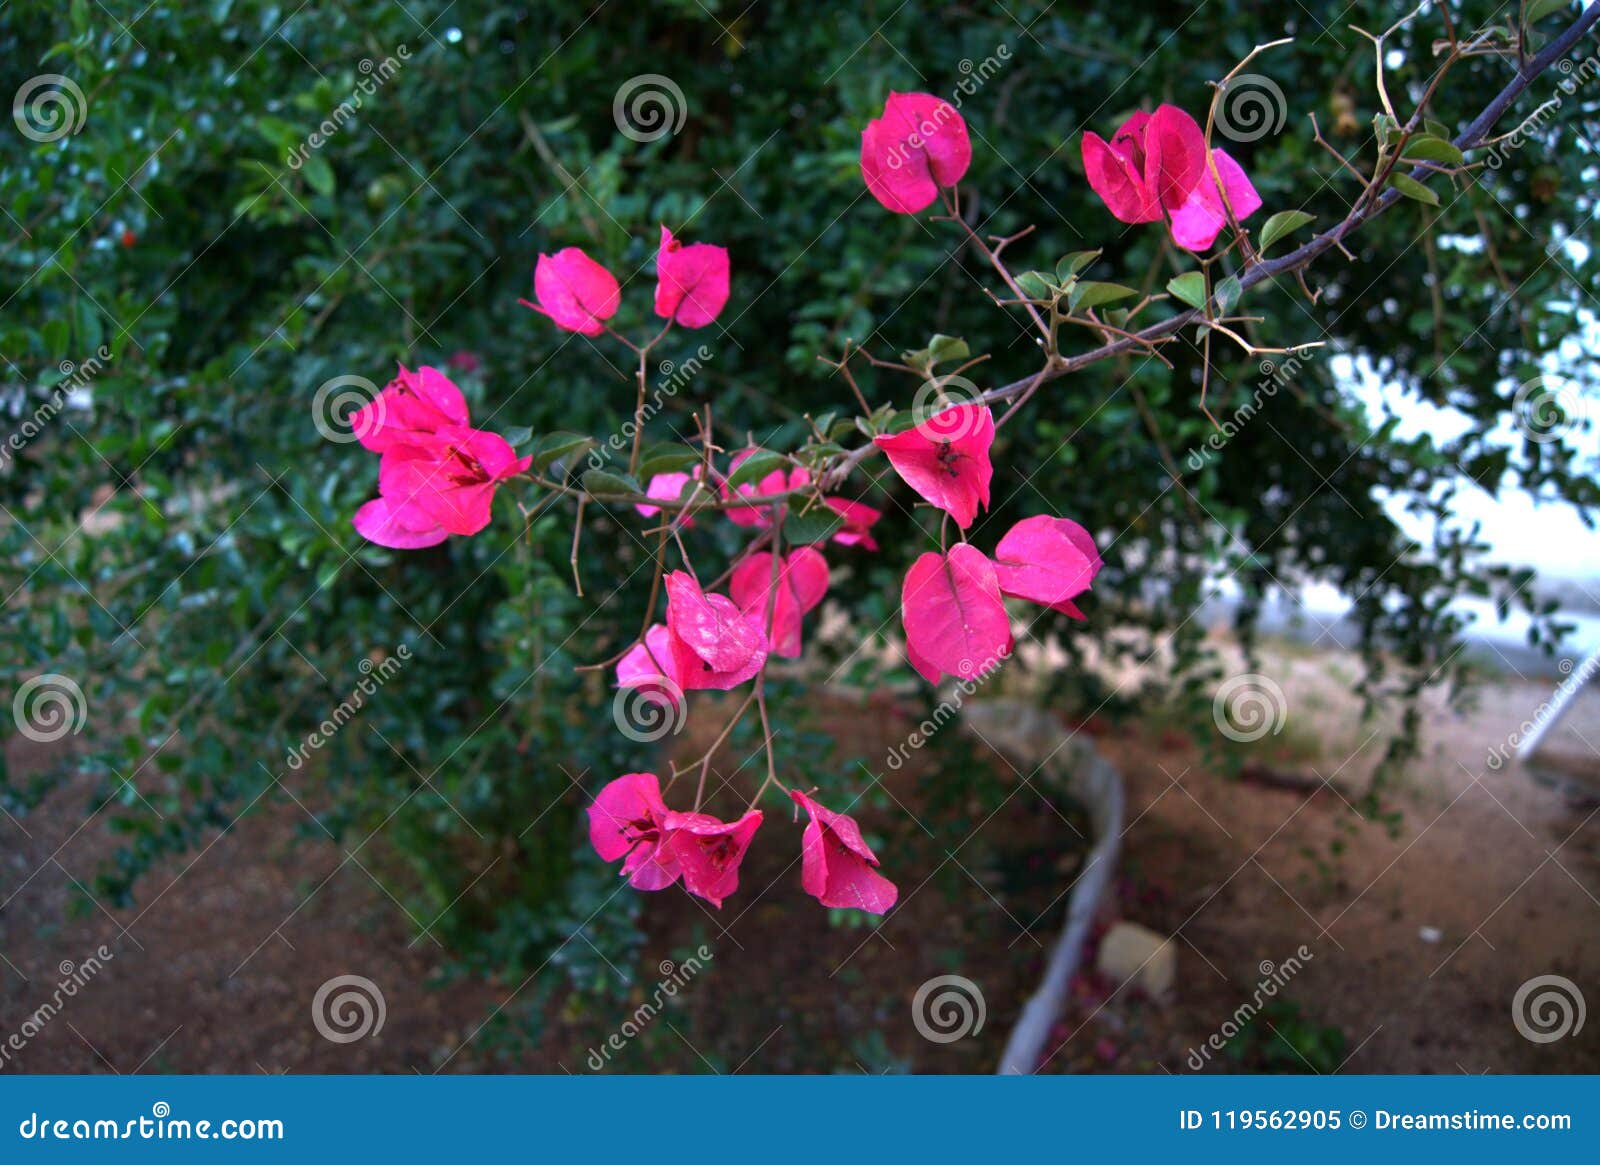 buganvilla pink flowers